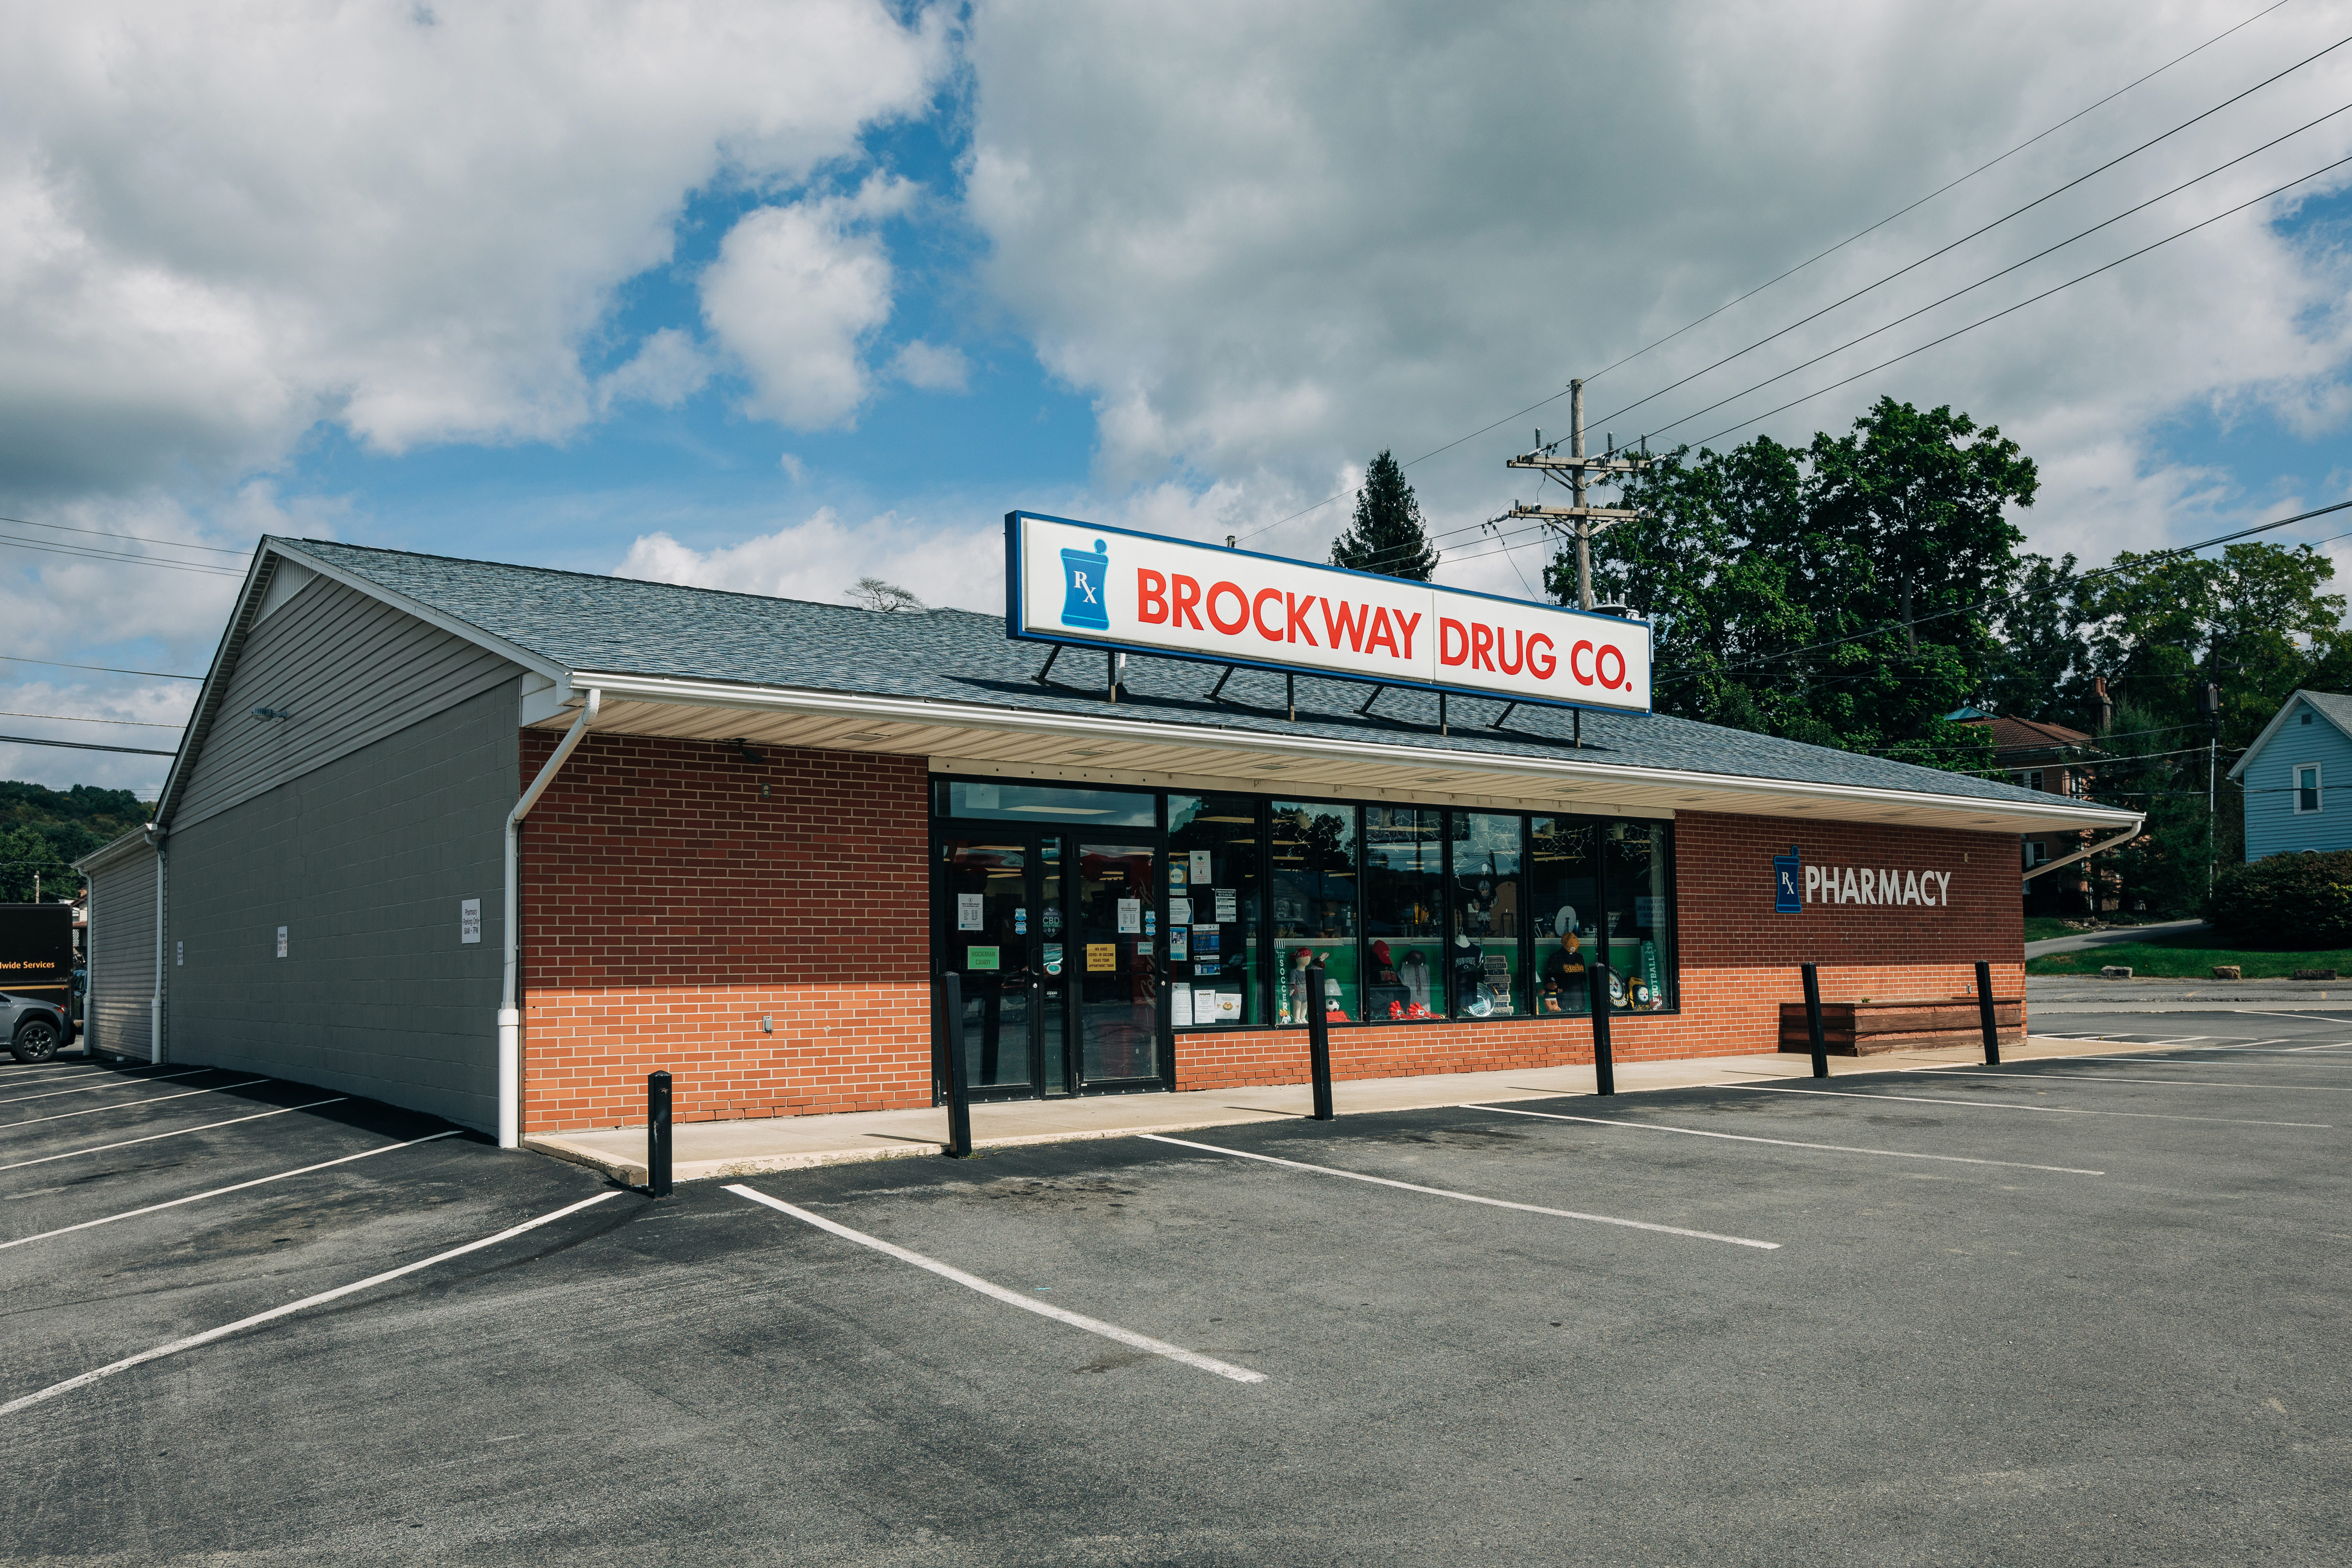 Brockway Drug Co